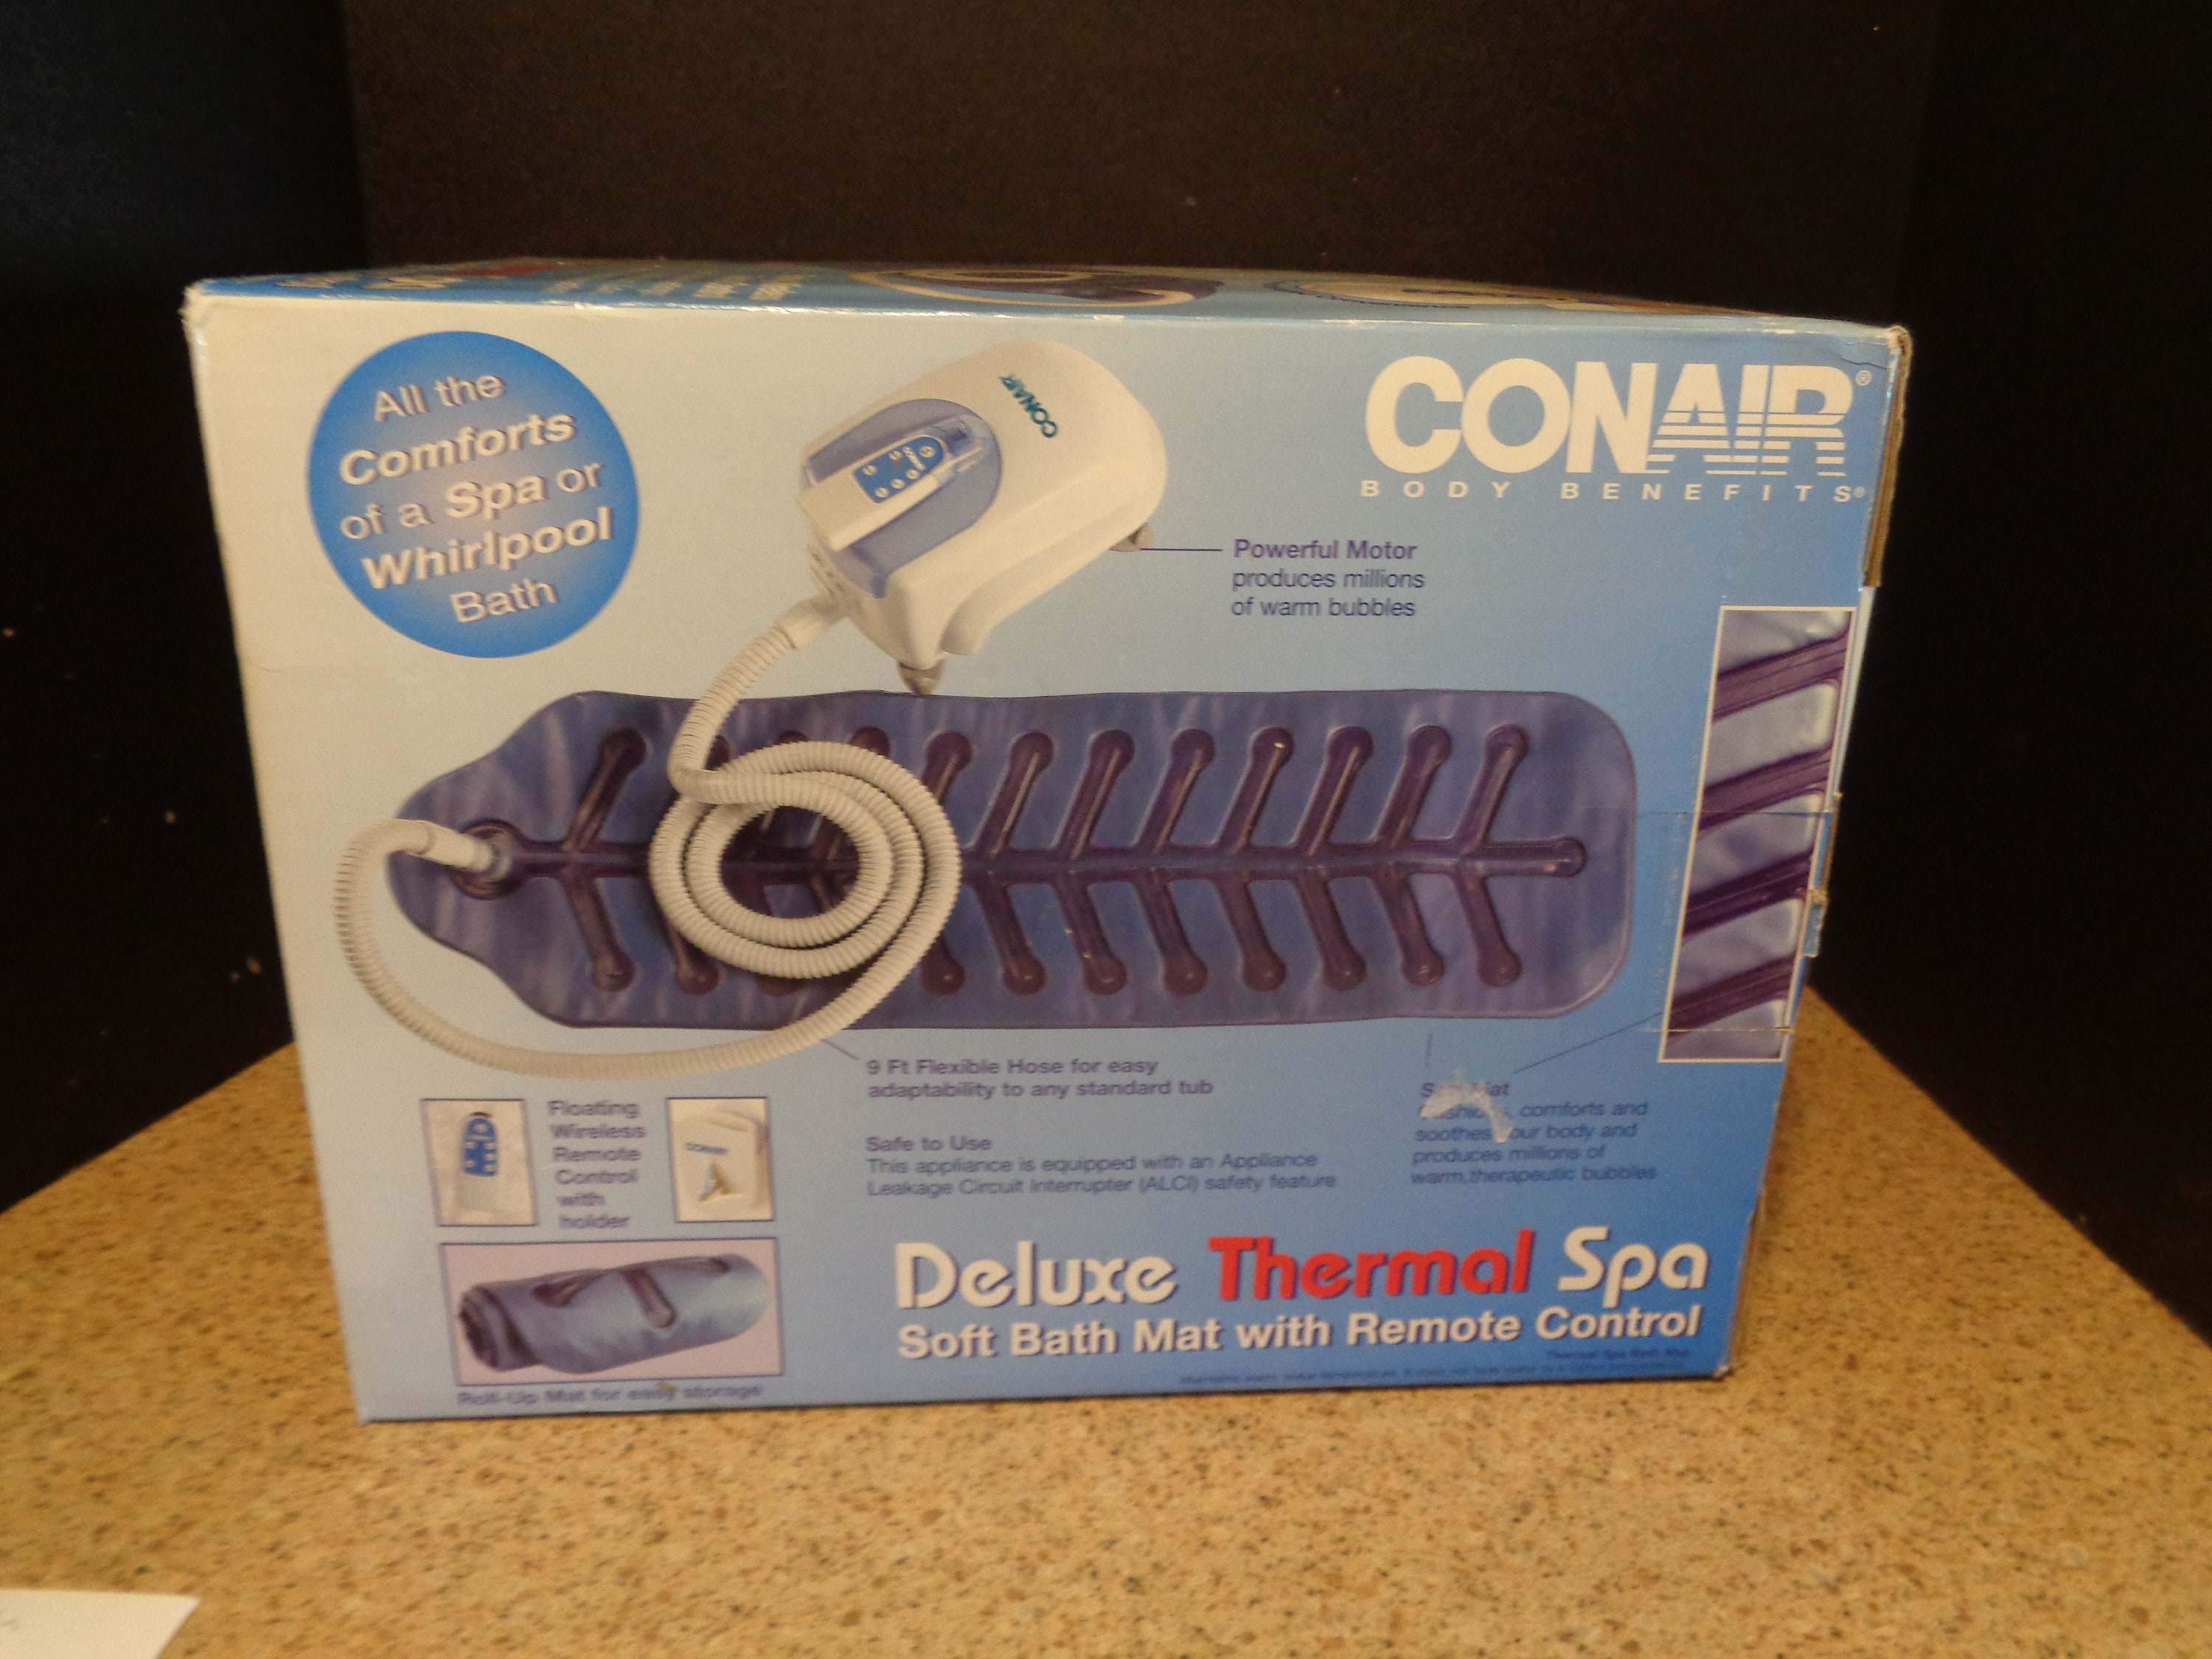 Conair Thermal Spa Bath Mat Massager